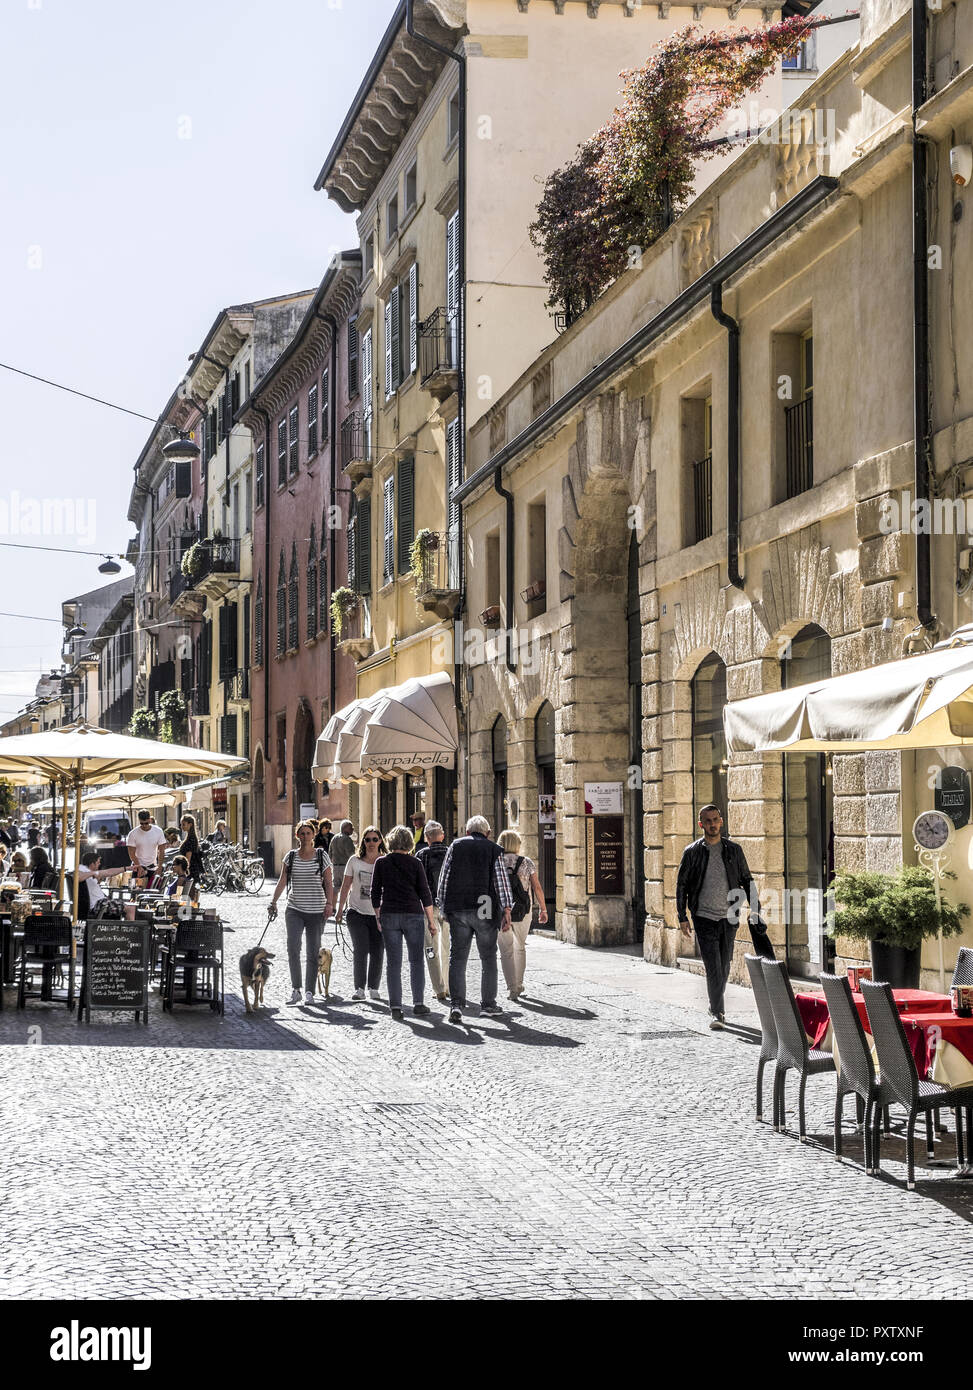 Old town of Verona, Italy Stock Photo